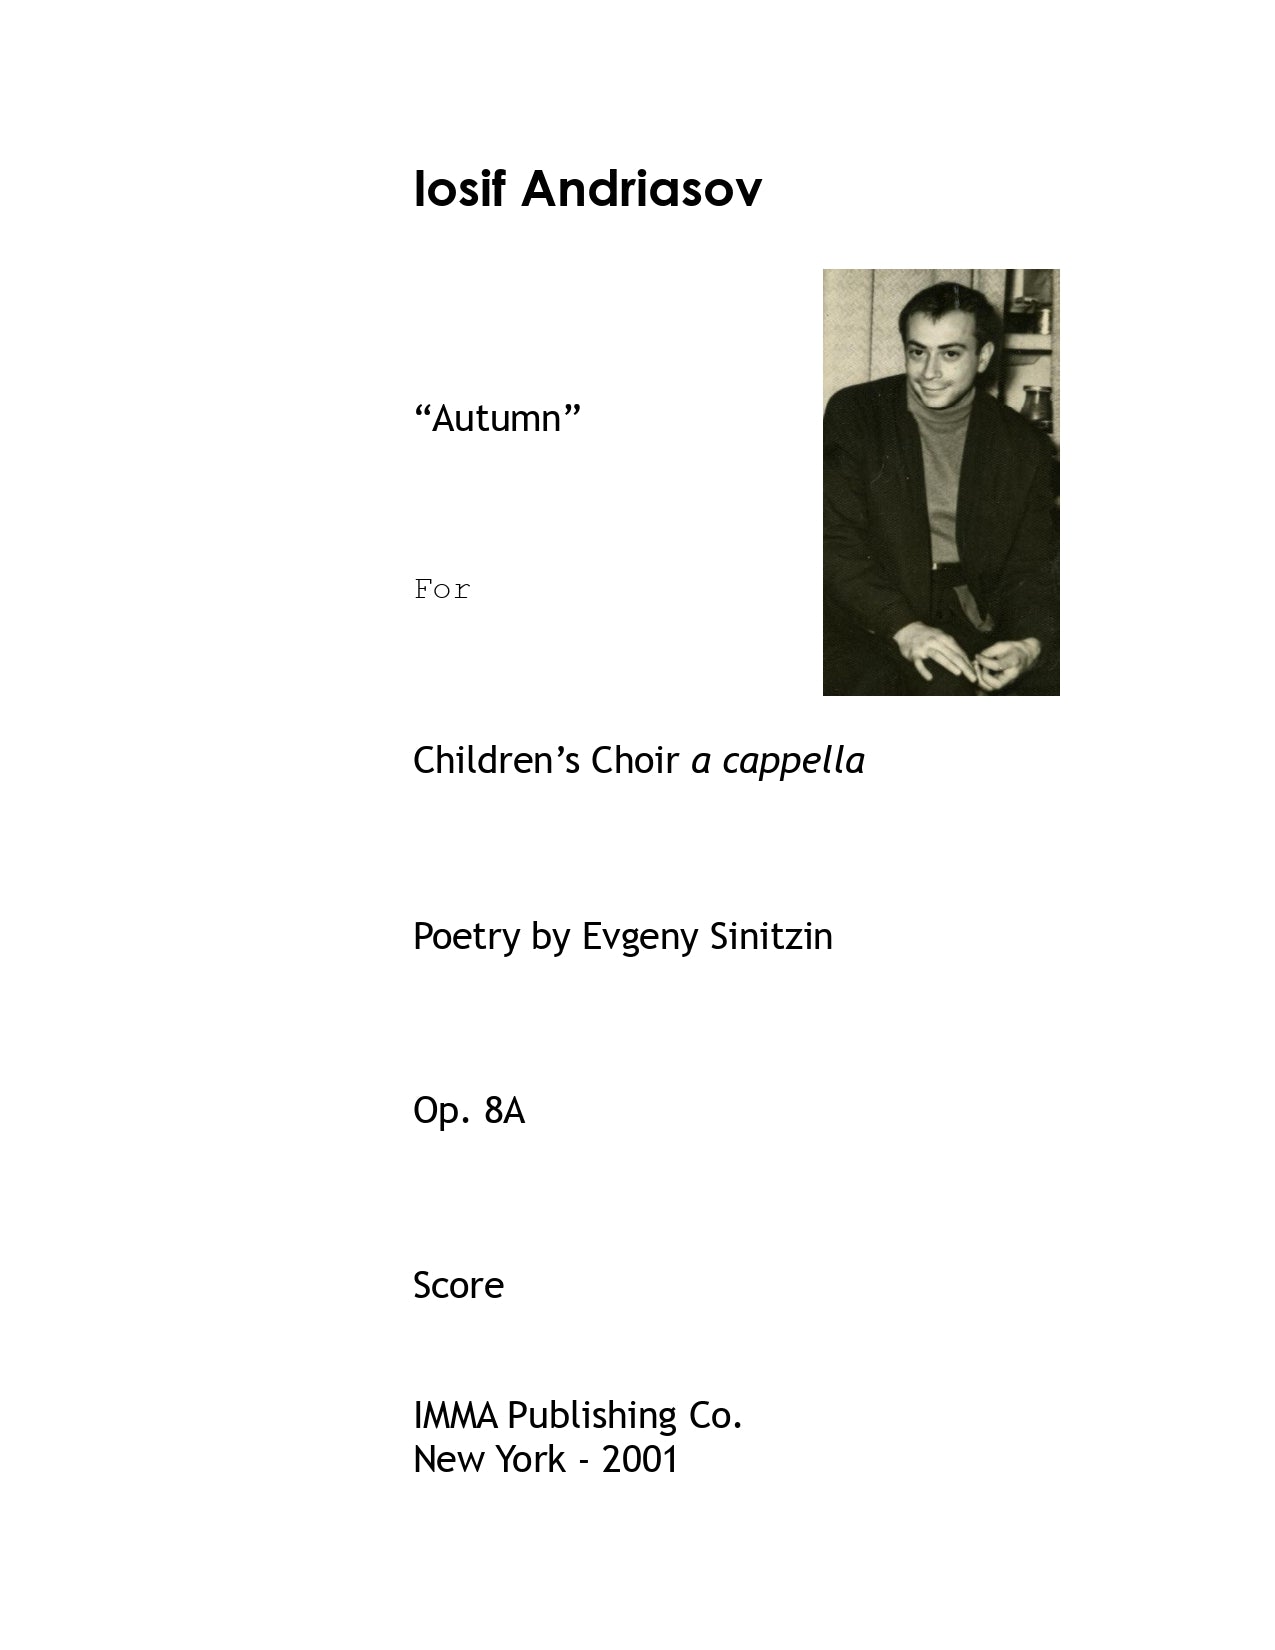 021. Iosif Andriasov: "Autumn", Op. 8A for Children's Choir a cappella.